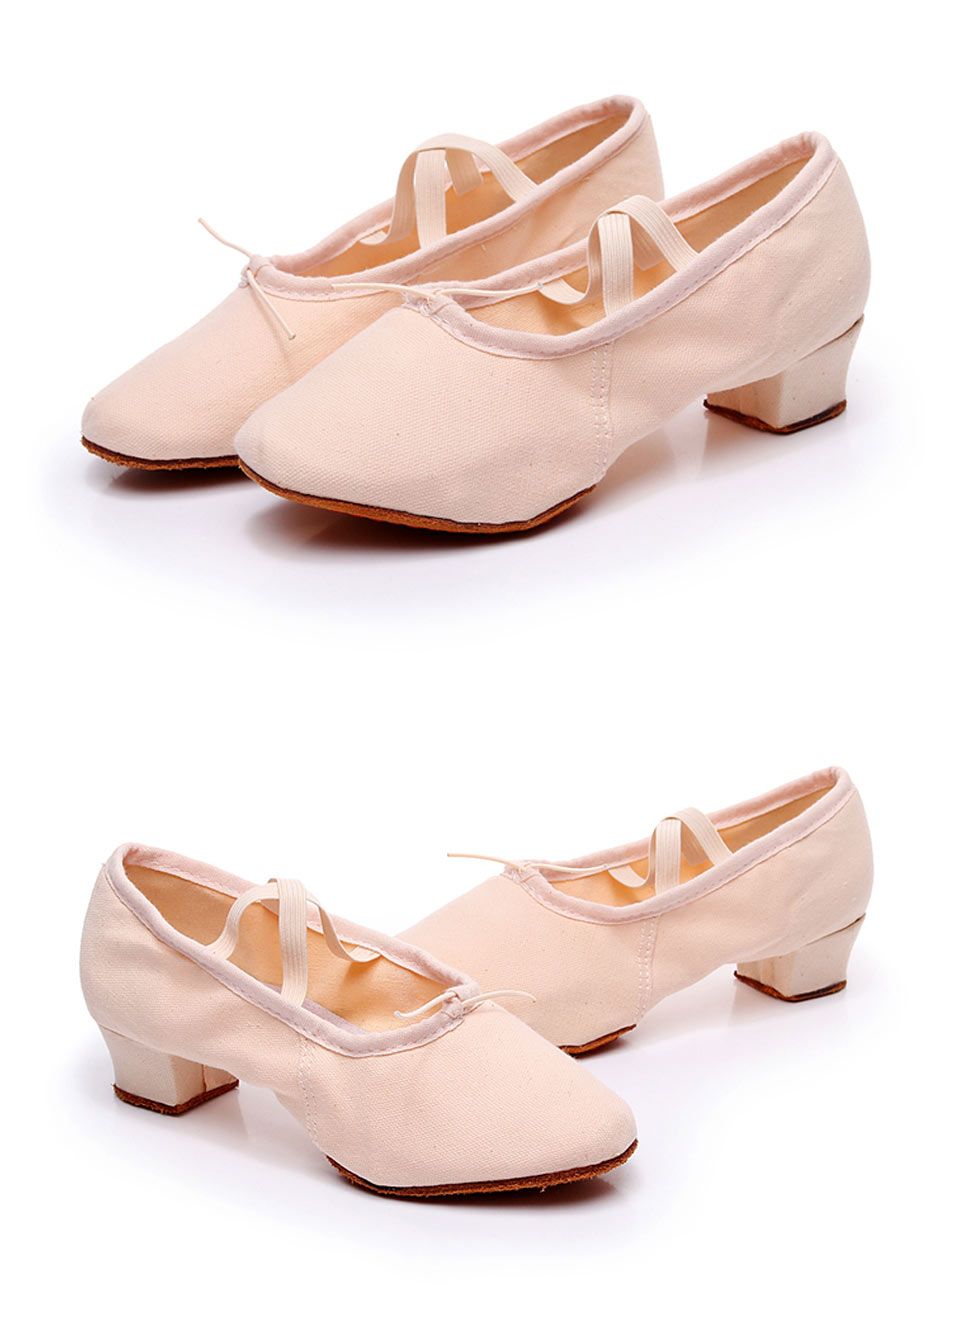 come4buy.com-Women Dance Shoes Girls Ballet Jazz Salsa Shoes